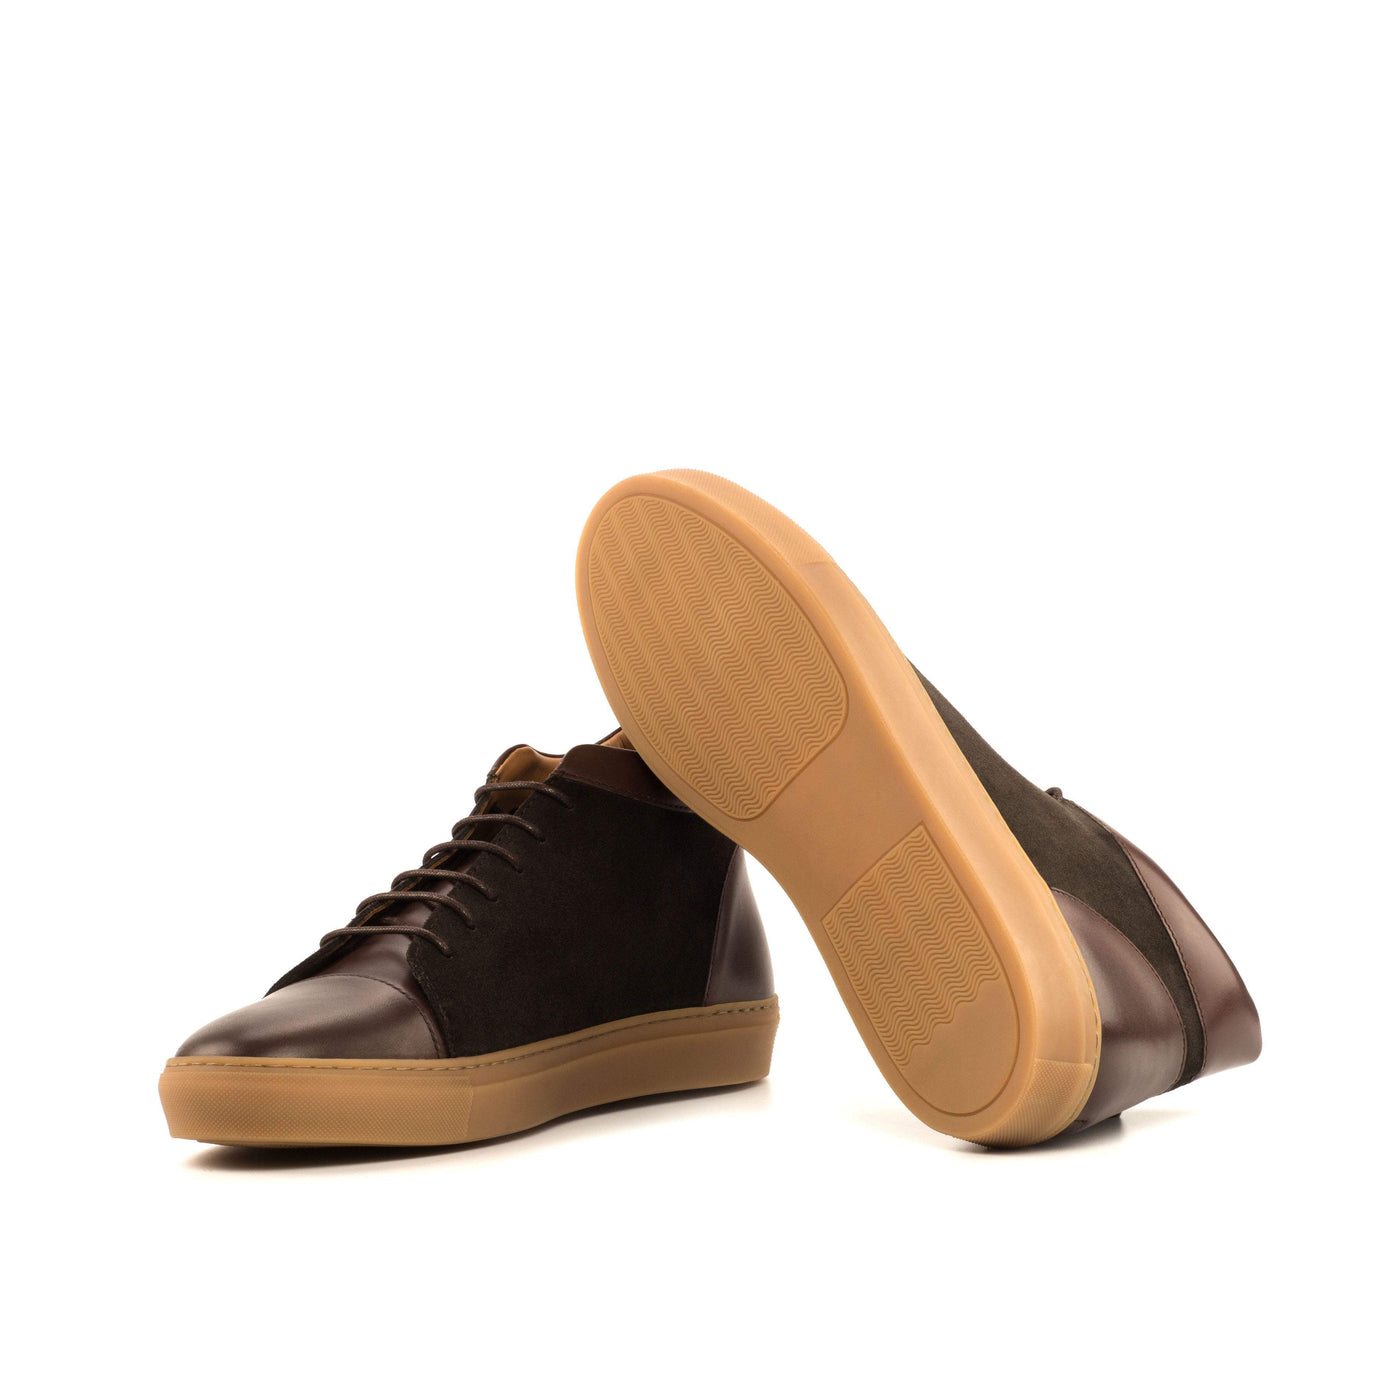 Men's High Top Sneakers Leather Dark Brown 4010 2- MERRIMIUM